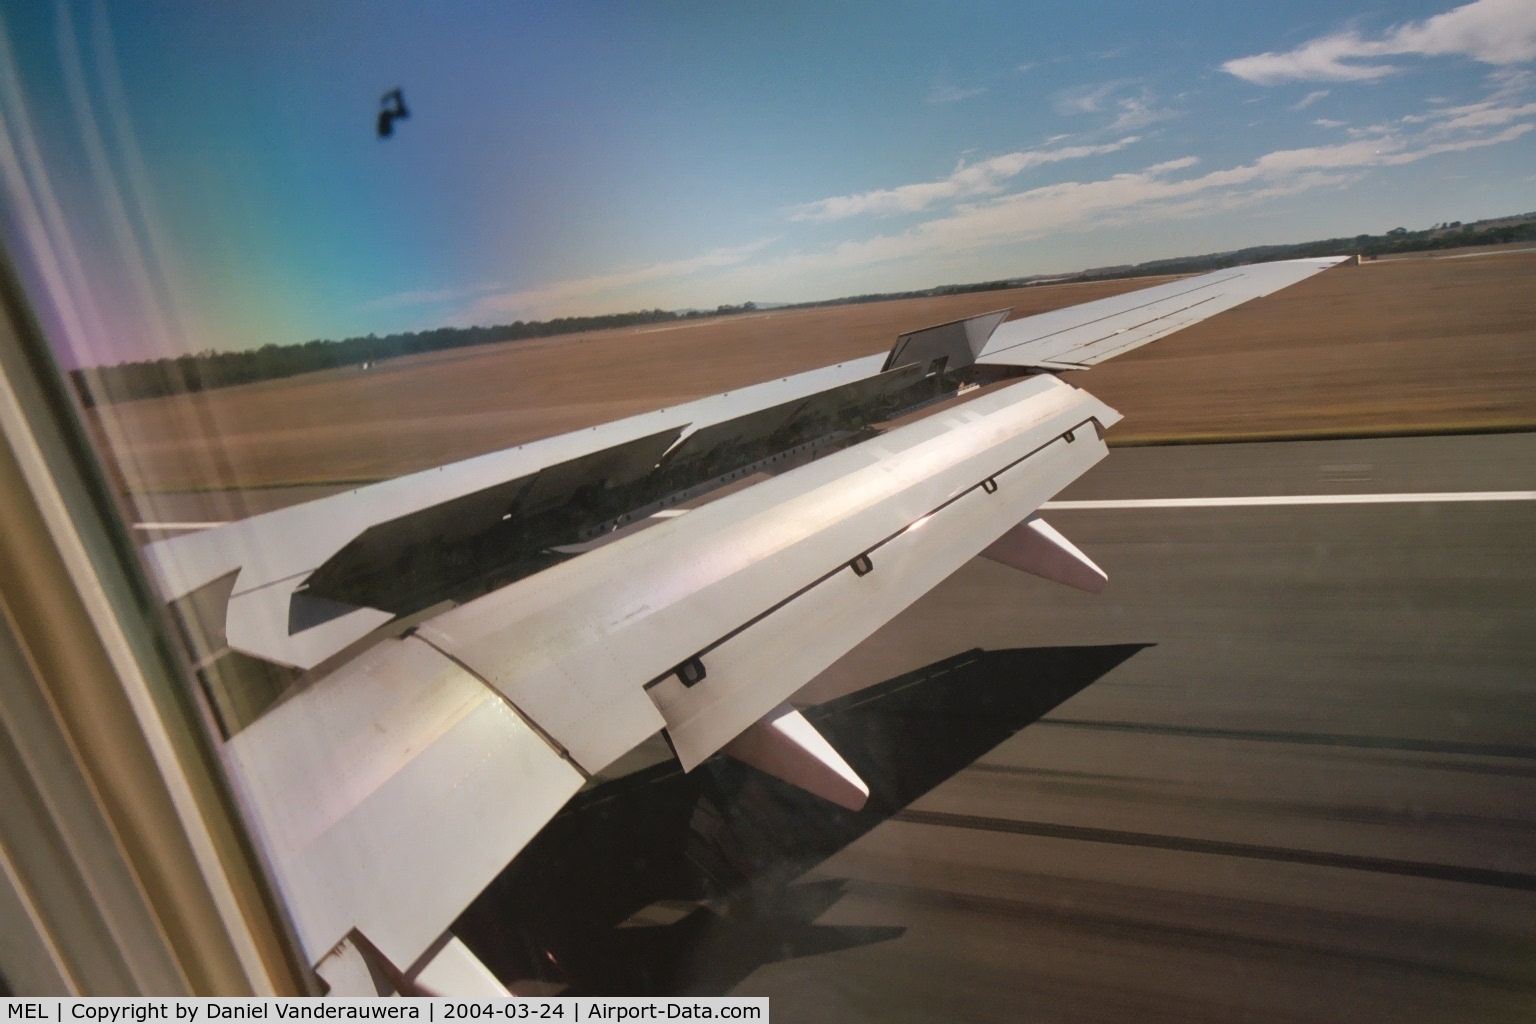 Melbourne International Airport, Tullamarine, Victoria Australia (MEL) - flight DJ816 just landed on MEL rwy